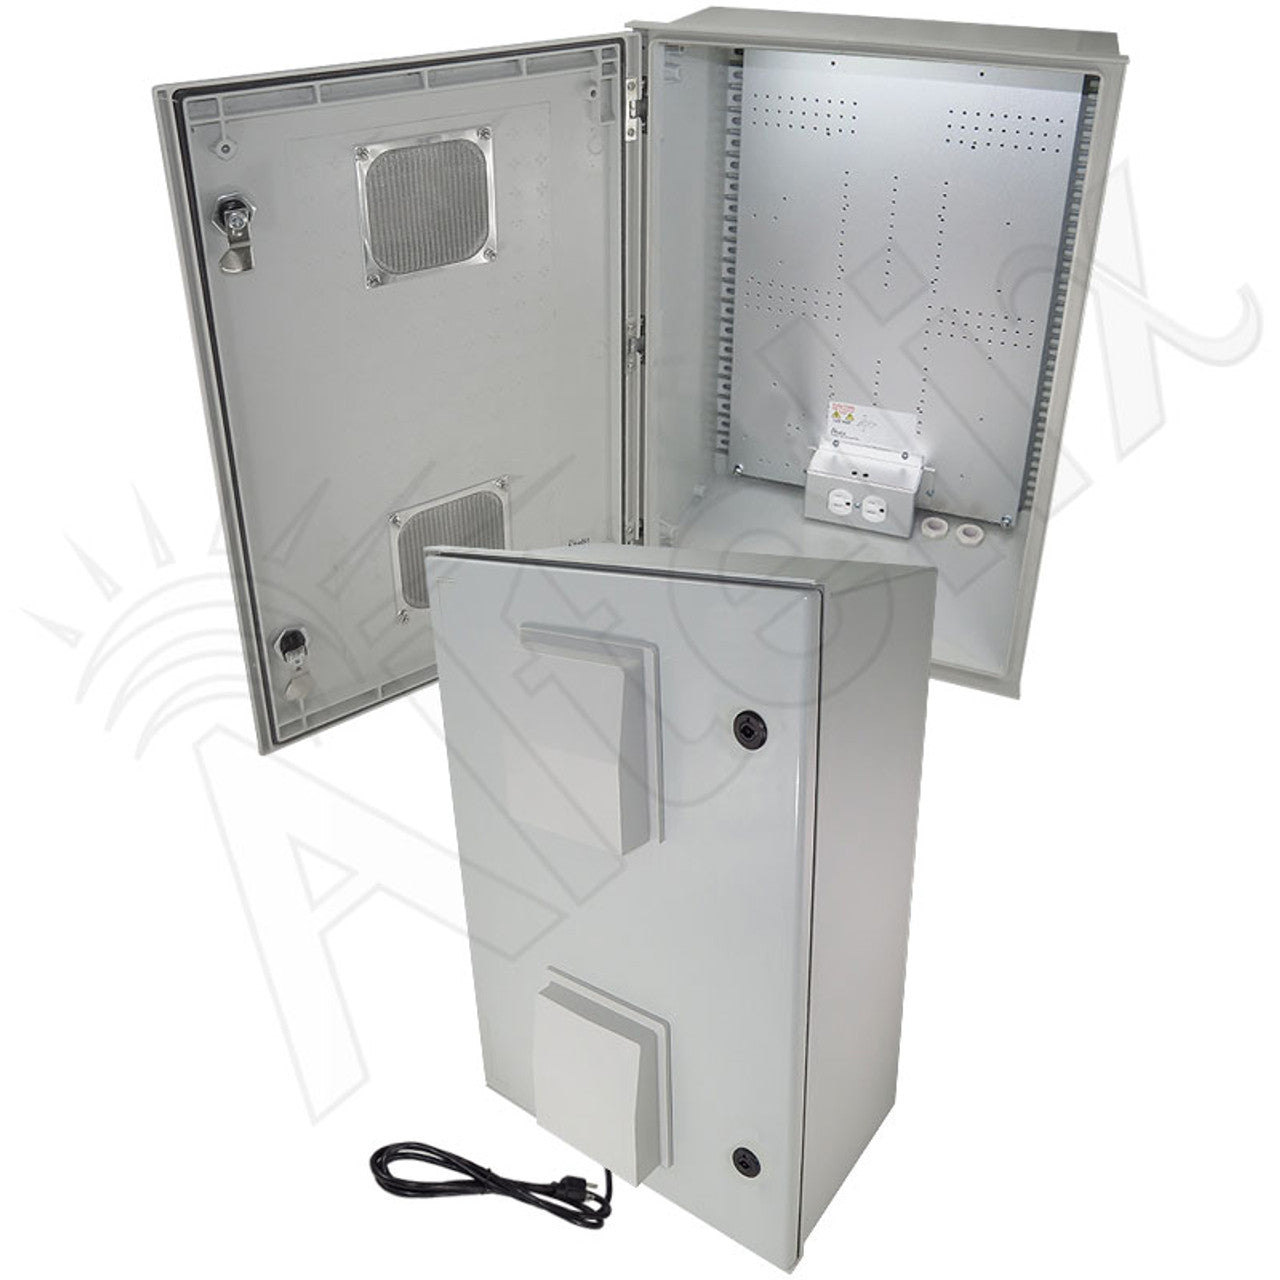 Altelix Vented Fiberglass Weatherproof NEMA Enclosure with Equipment Mounting Plate, 120 VAC Outlets & Power Cord